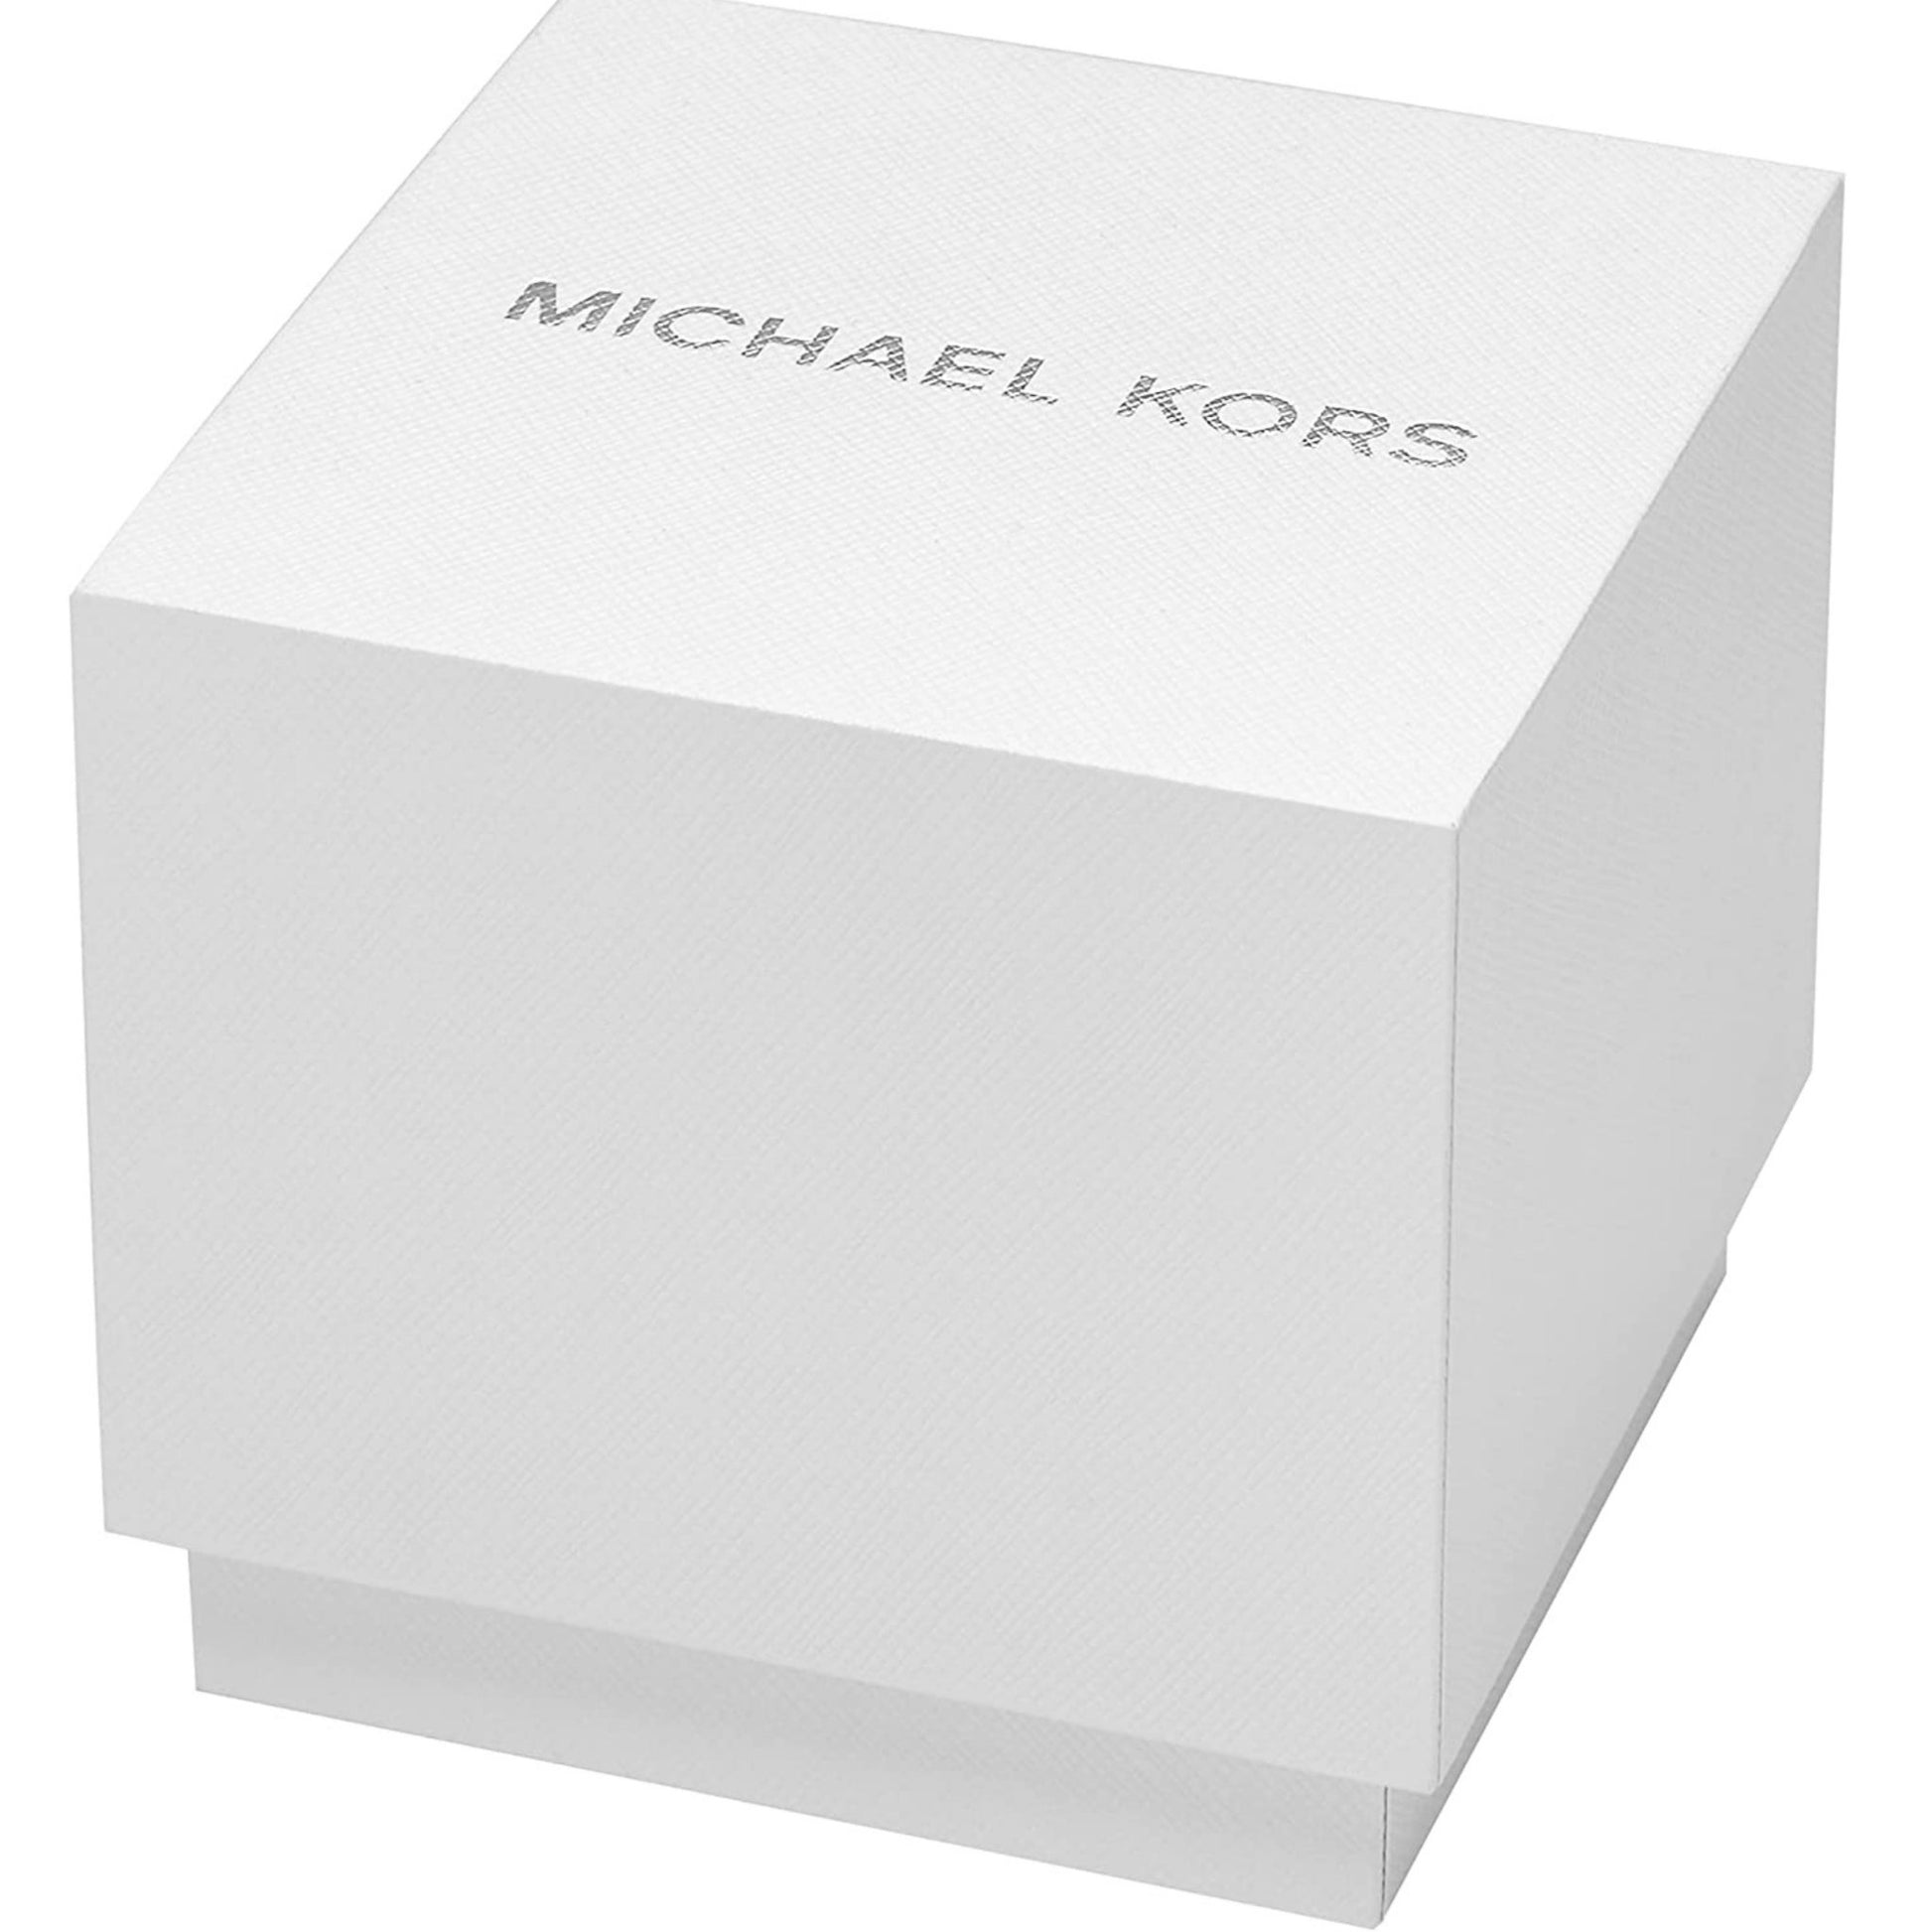 Michael Kors Women's Watch - Slim Runway Logo Rose Black 42mm (MK3589)